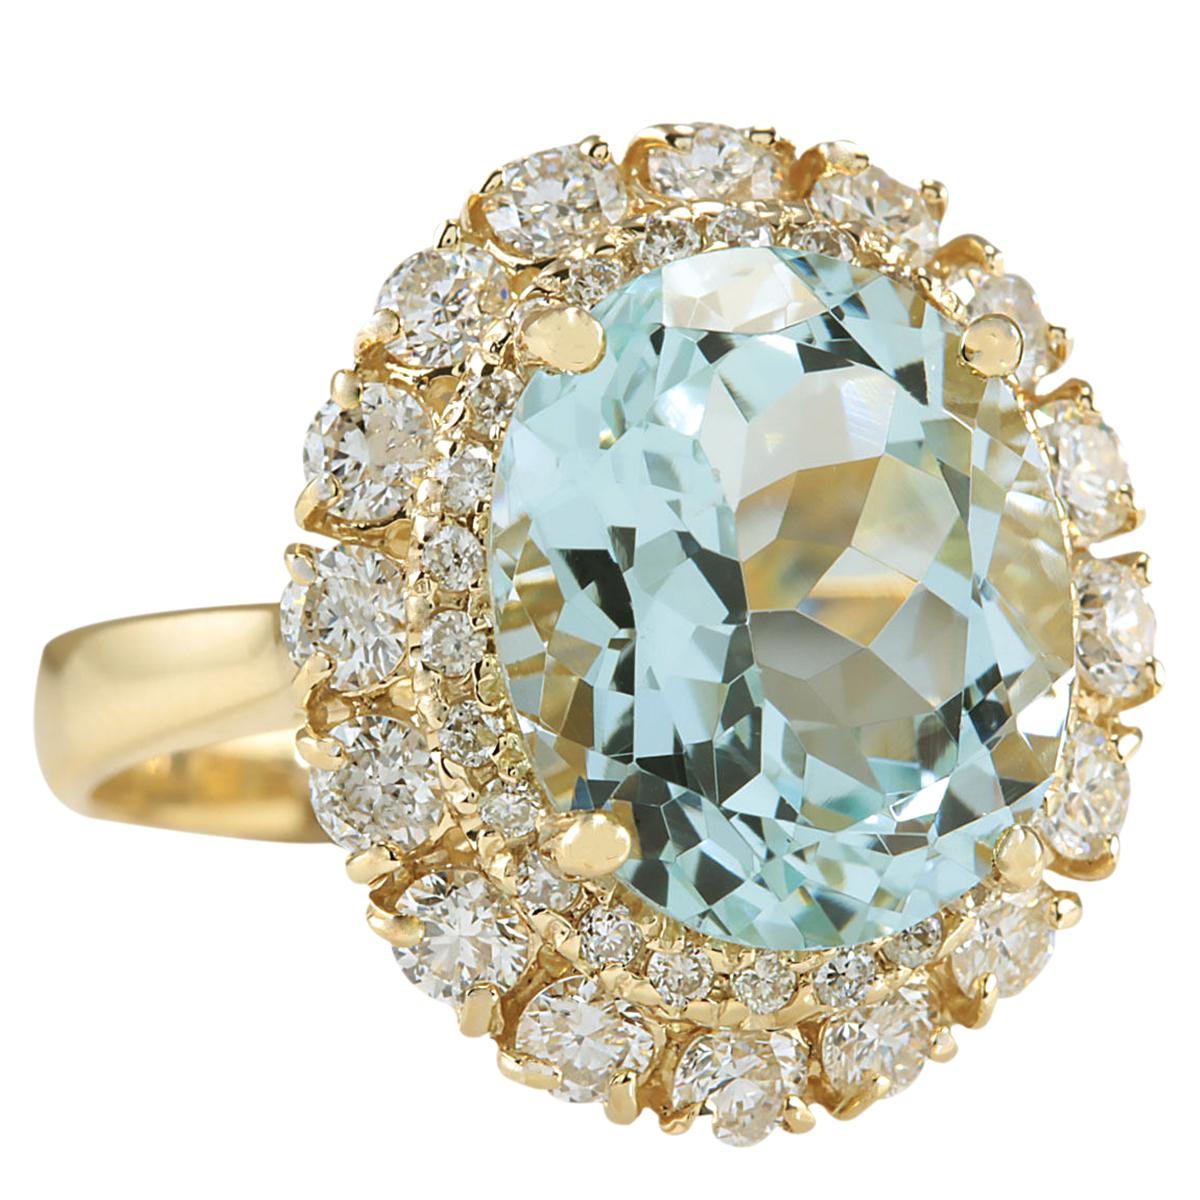 7.53 Carat Natural Aquamarine 14 Karat Yellow Gold Diamond Ring
Stamped: 14K Yellow Gold
Total Ring Weight: 6.0 Grams
Aquamarine Weight is 6.13 Carat (Measures: 13.00x11.00 mm)
Diamond Weight is 1.40 Carat
Color: F-G, Clarity: VS2-SI1
Face Measures: